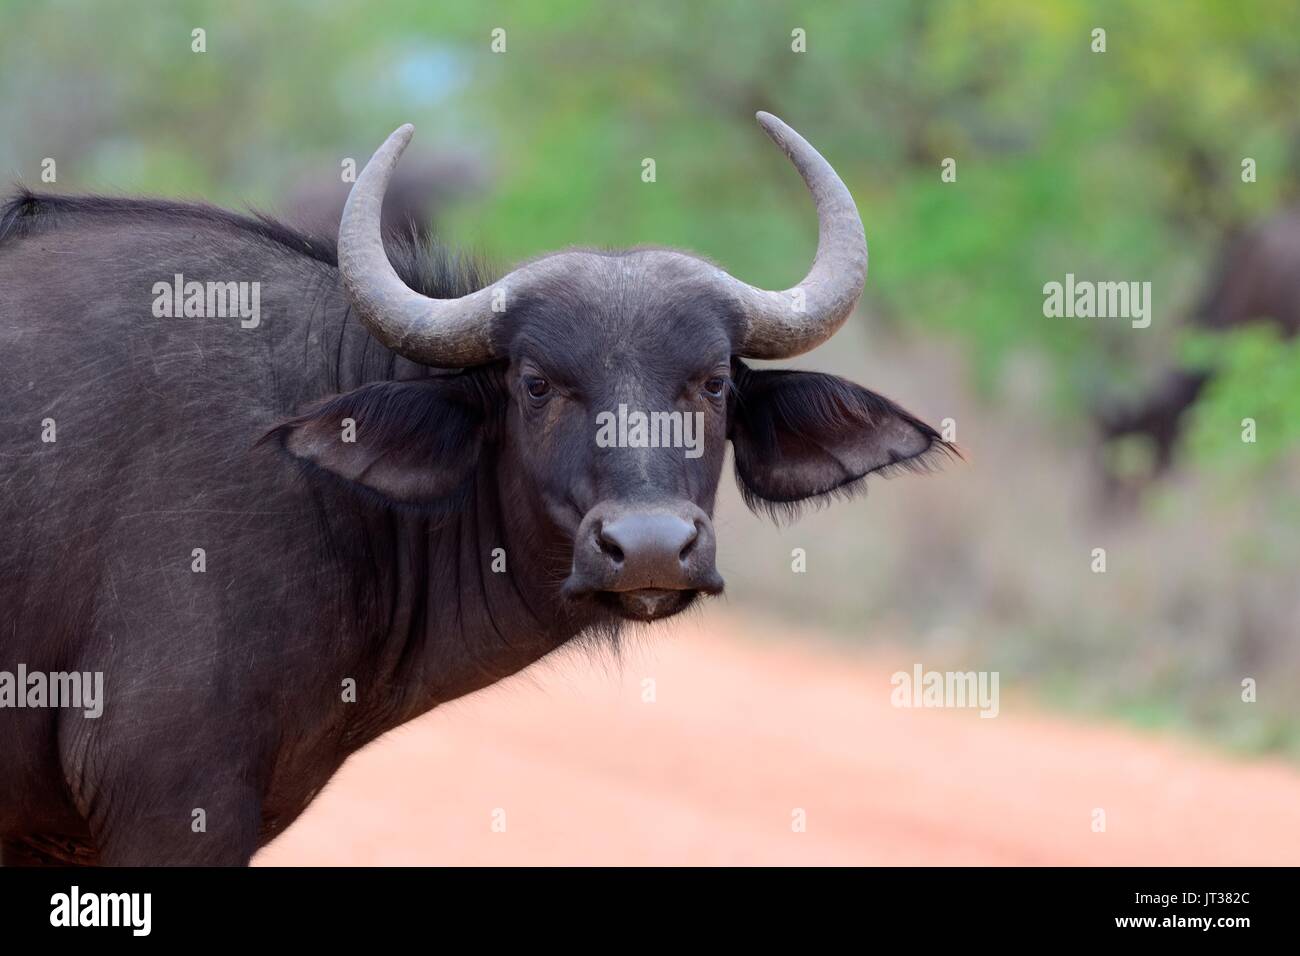 El búfalo africano (Syncerus o Cape búfalo caffer), cruzando una carretera de tierra, el Parque Nacional Kruger, Sudáfrica, África Foto de stock